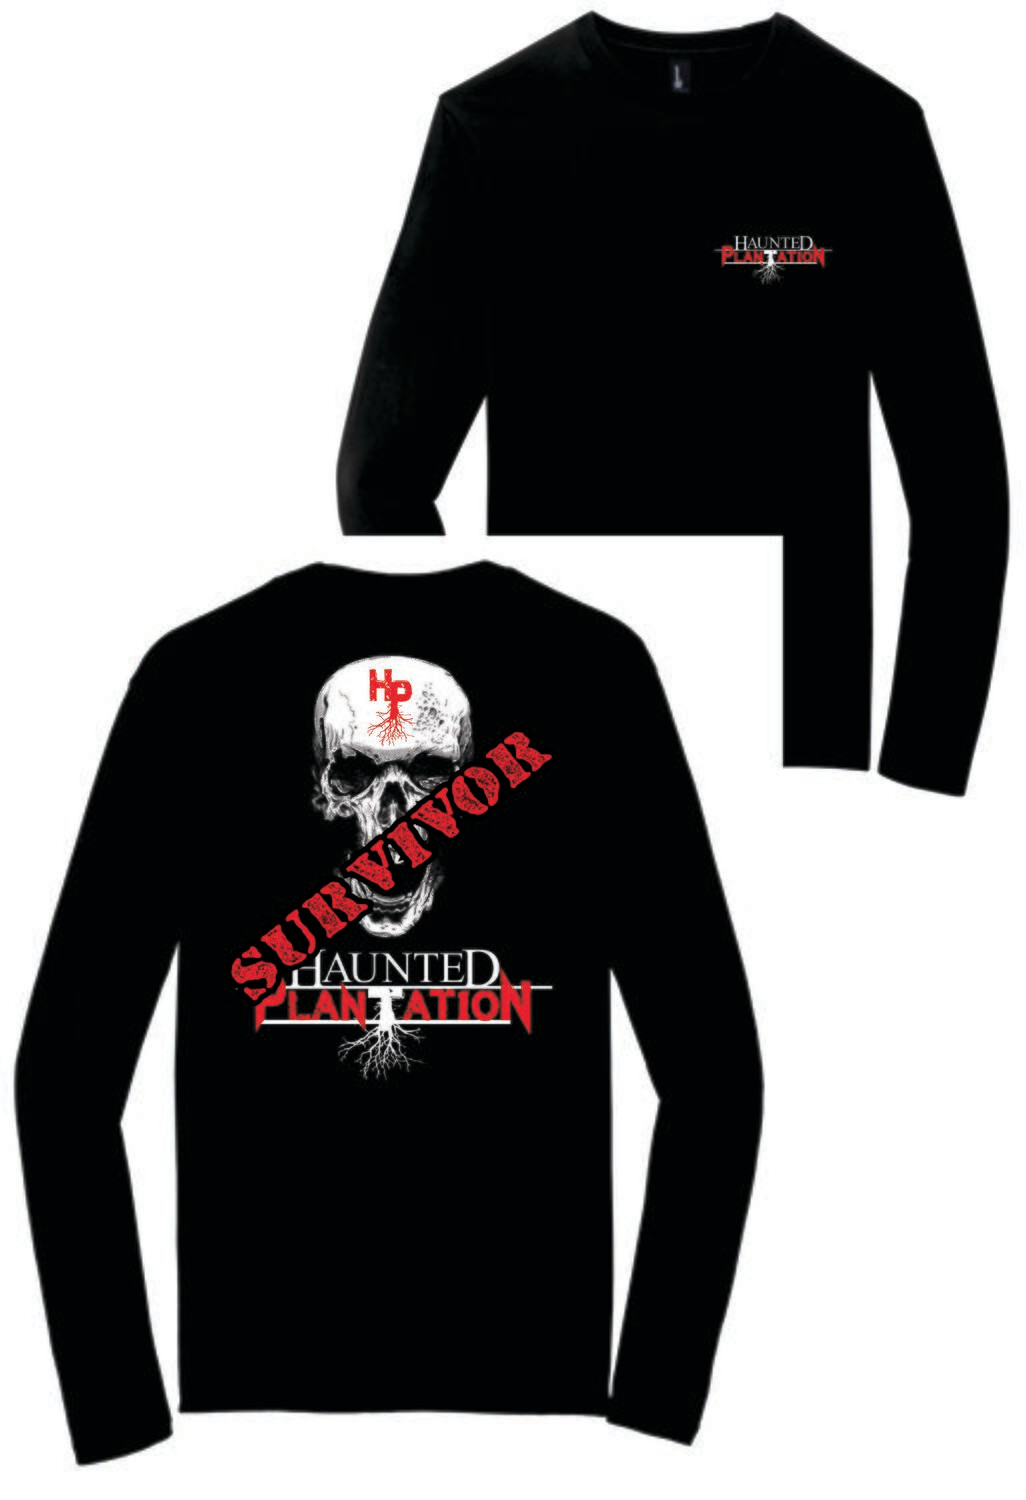 HAUNTED PLANTATION :
64400 - Gildan Softstyle® Long Sleeve T-Shirt